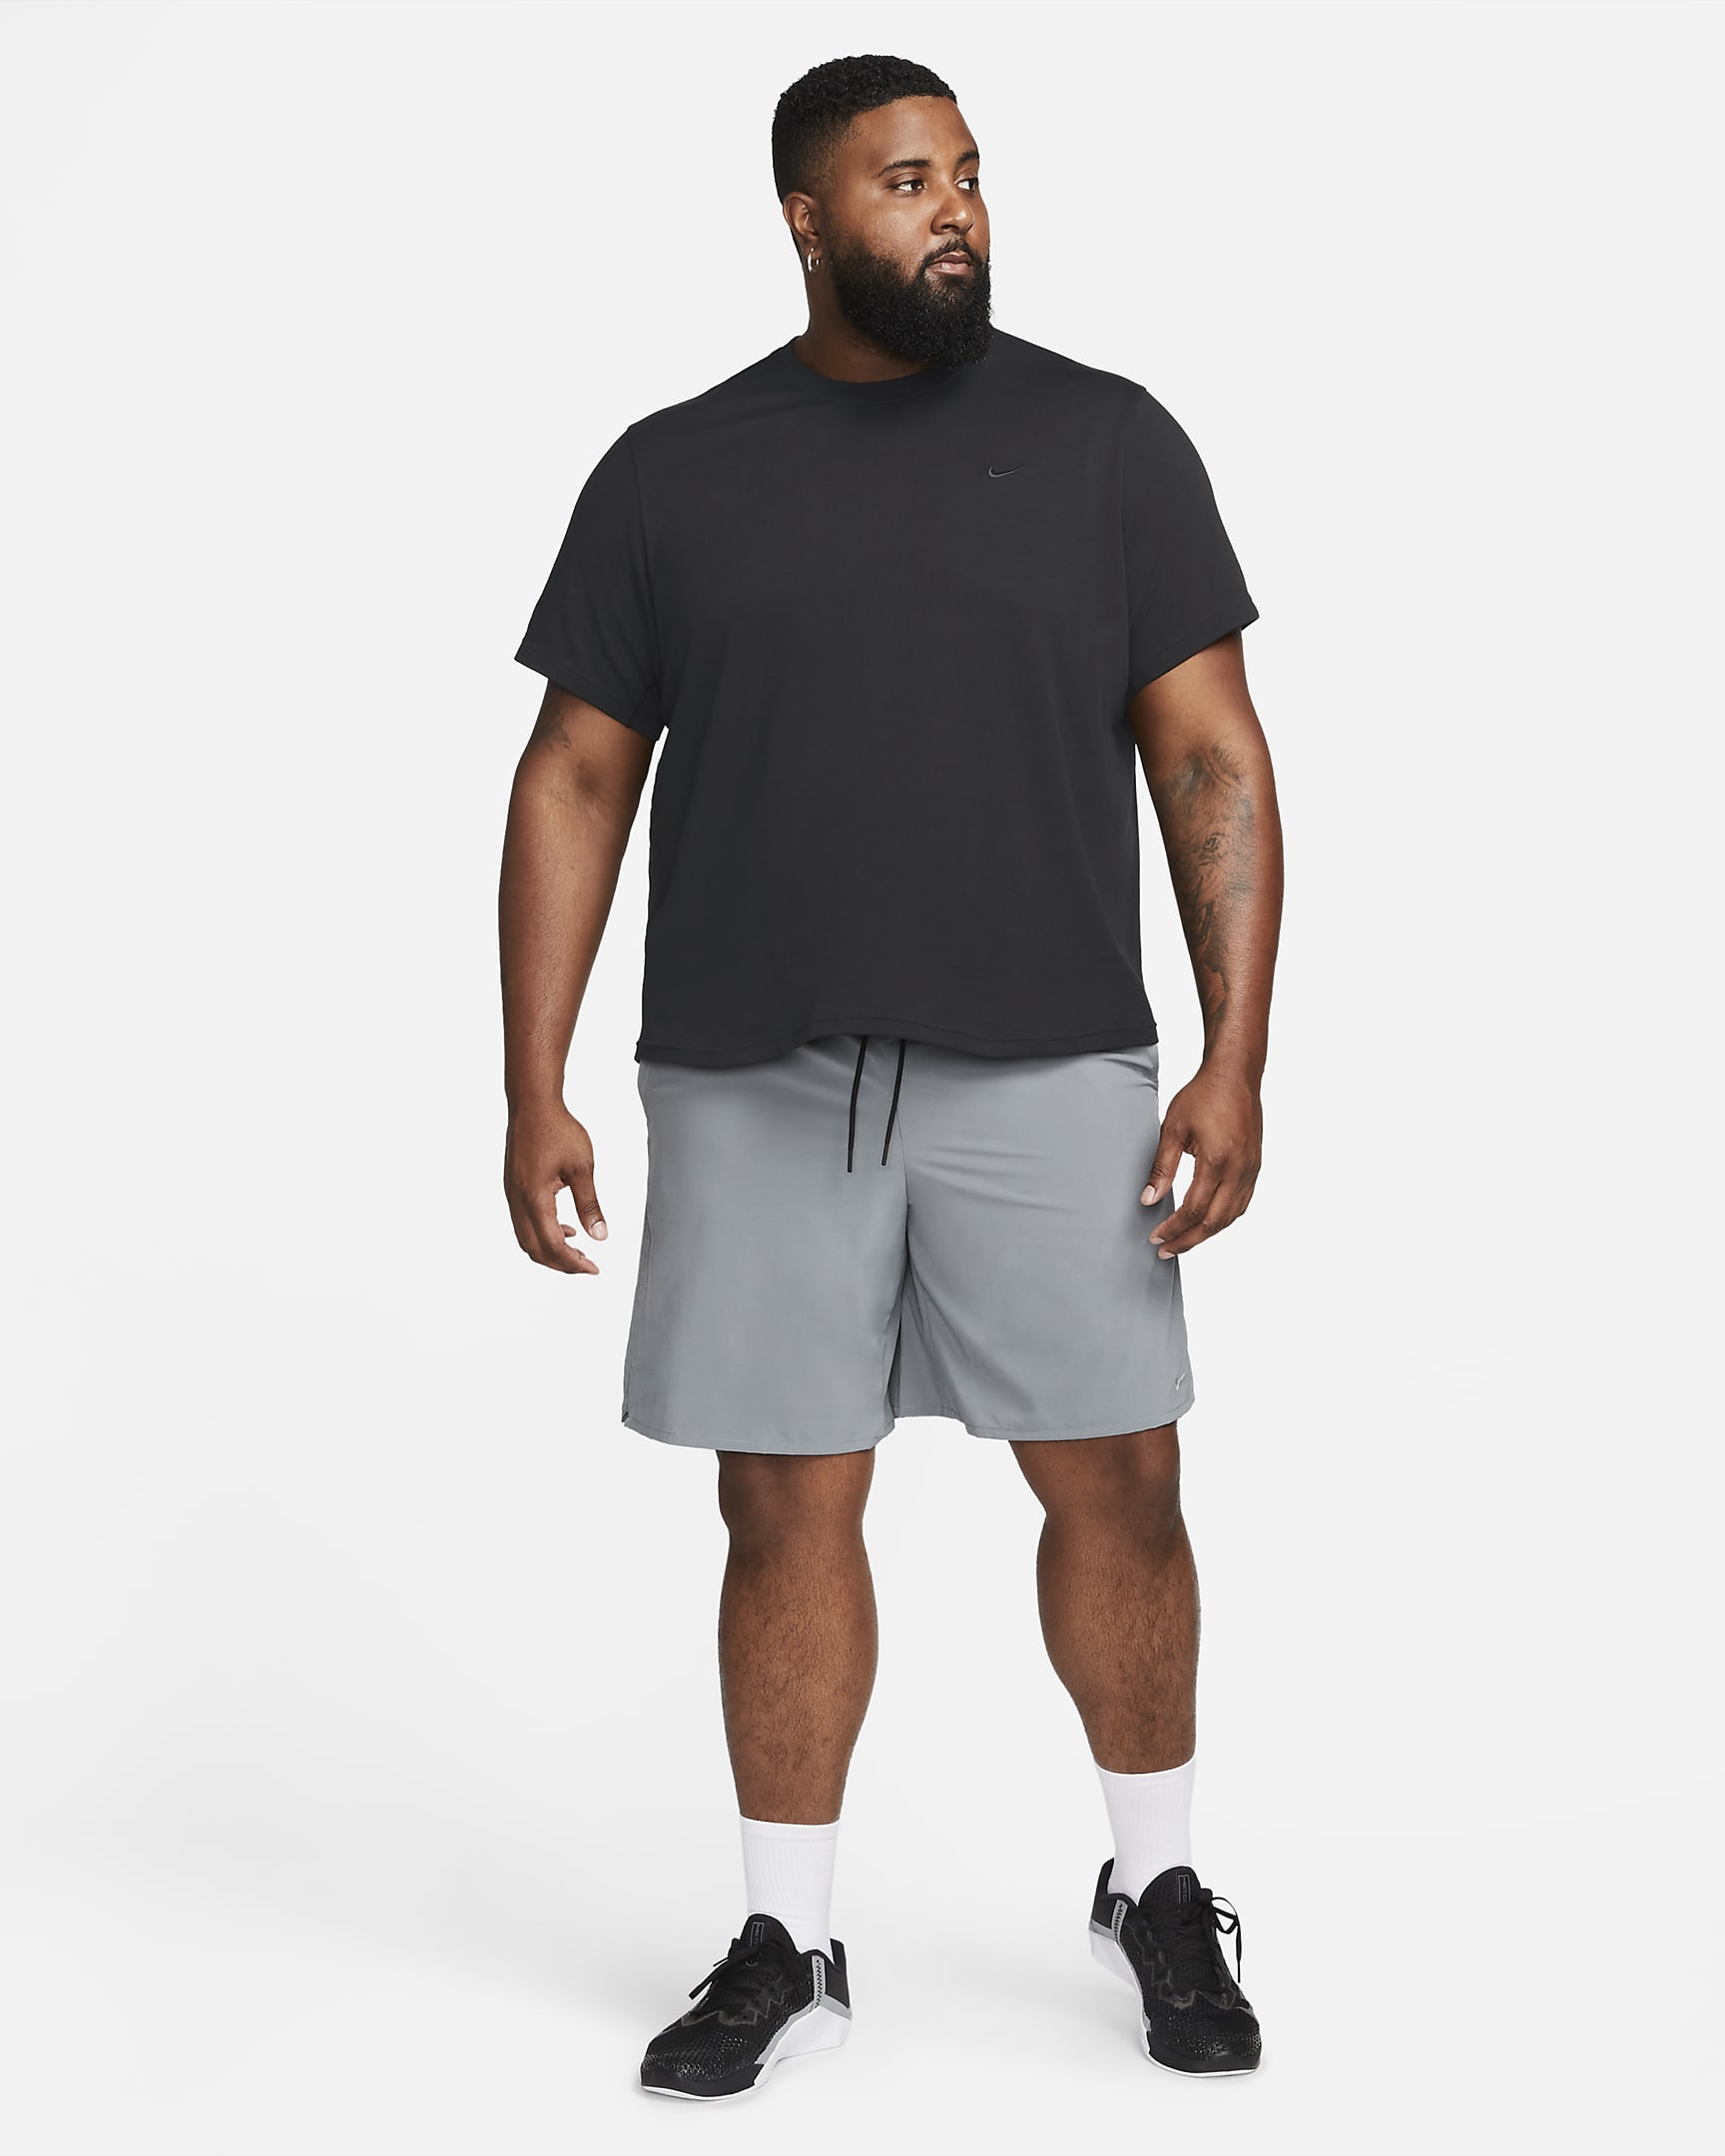 Nike Primary Men's Dri-FIT Short-Sleeve Versatile Top. Nike.com